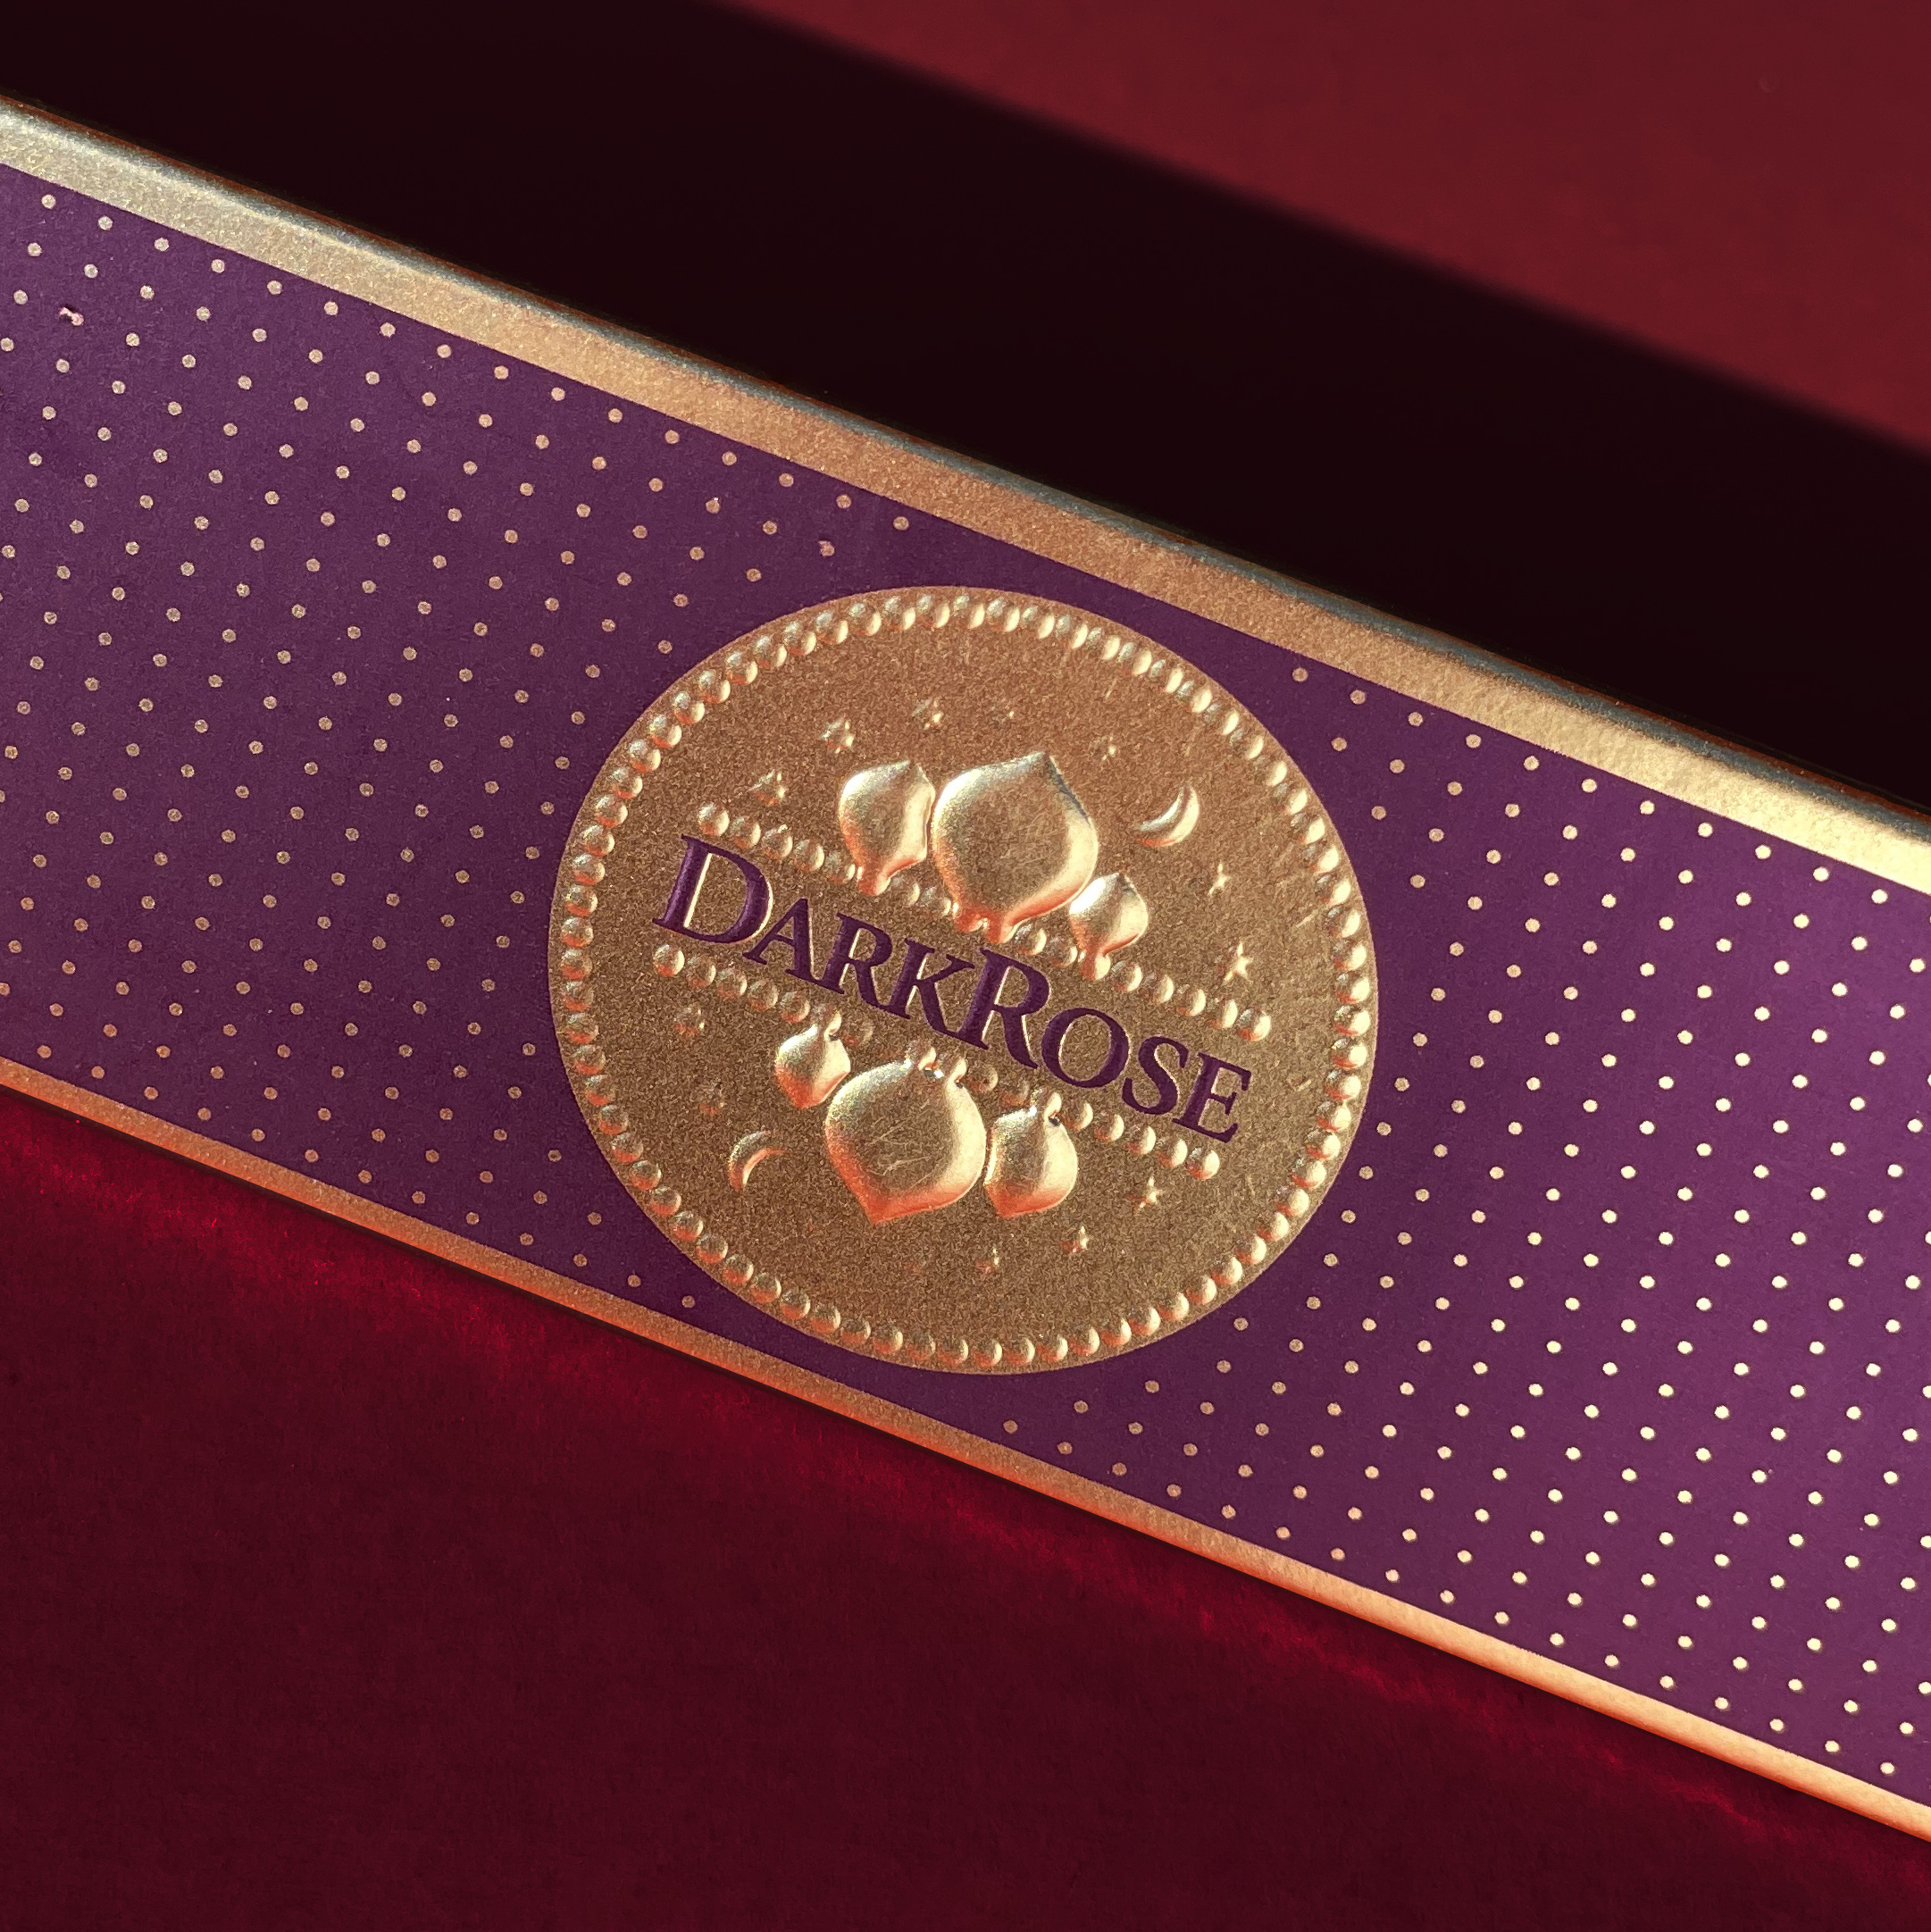 Czech & Speake Dark Rose Incense packaging purple golf red